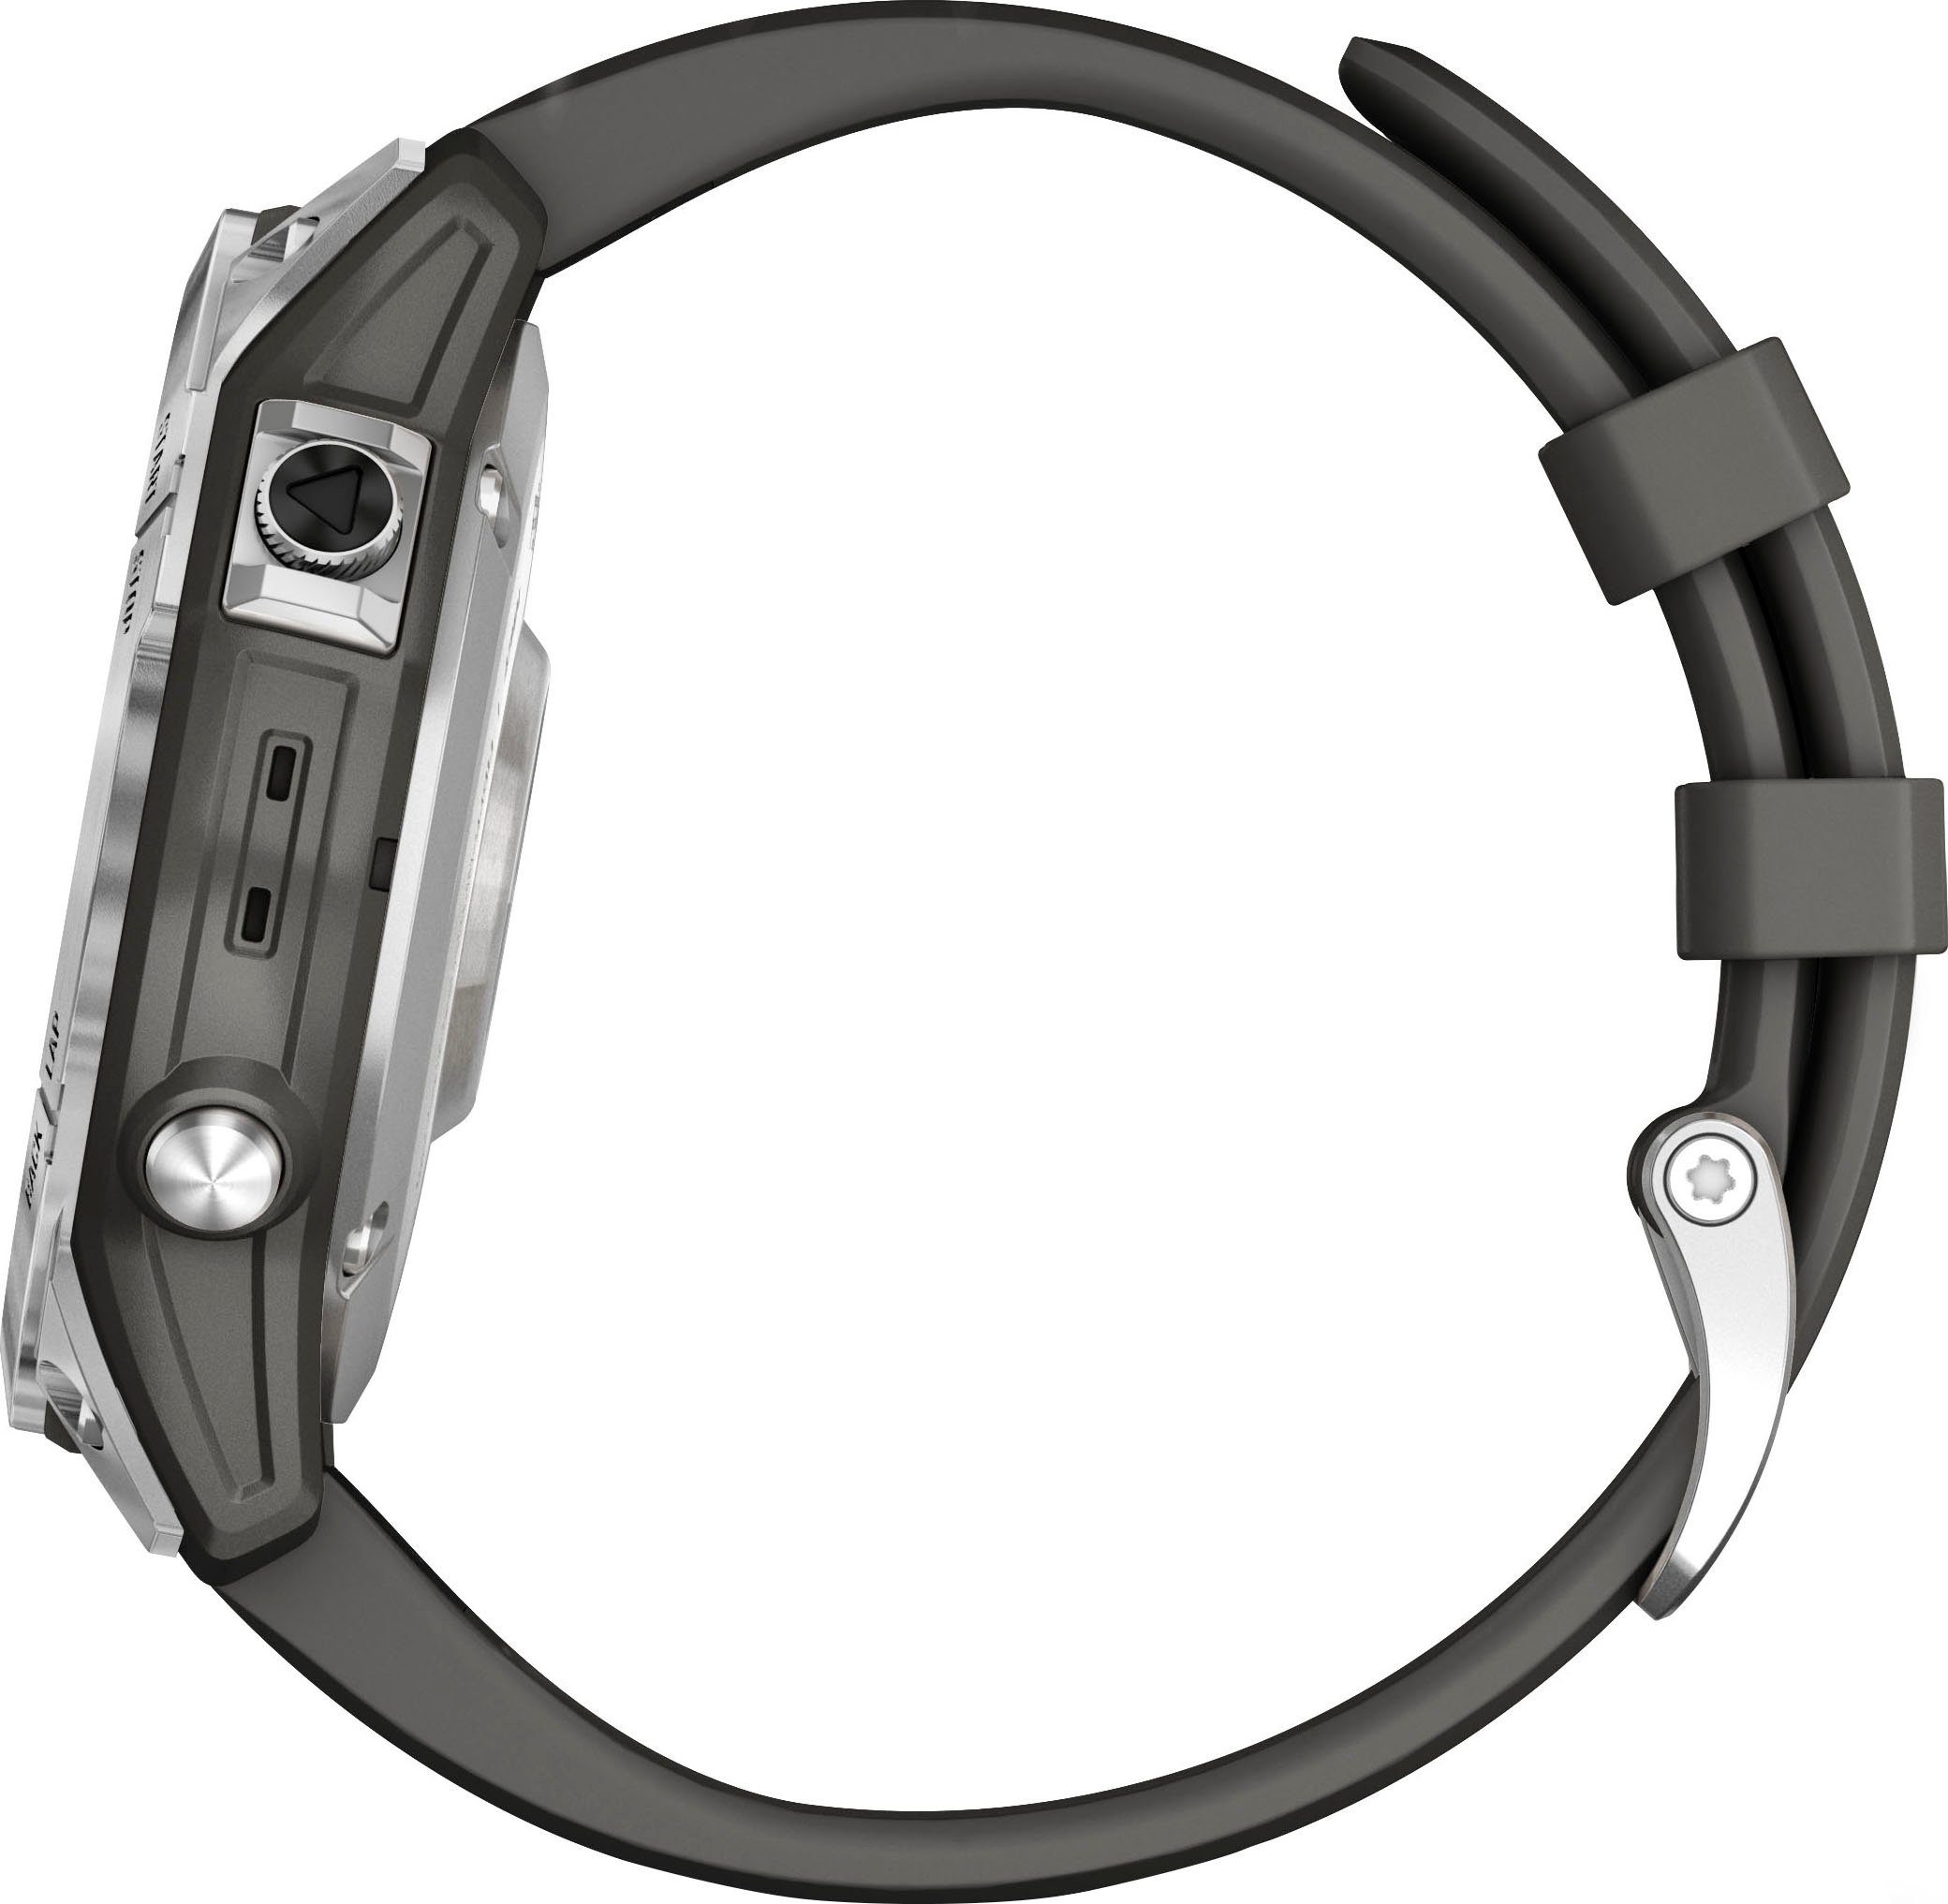 (3,30 Zoll, Smartwatch FENIX Garmin Garmin) 7 cm/1,3